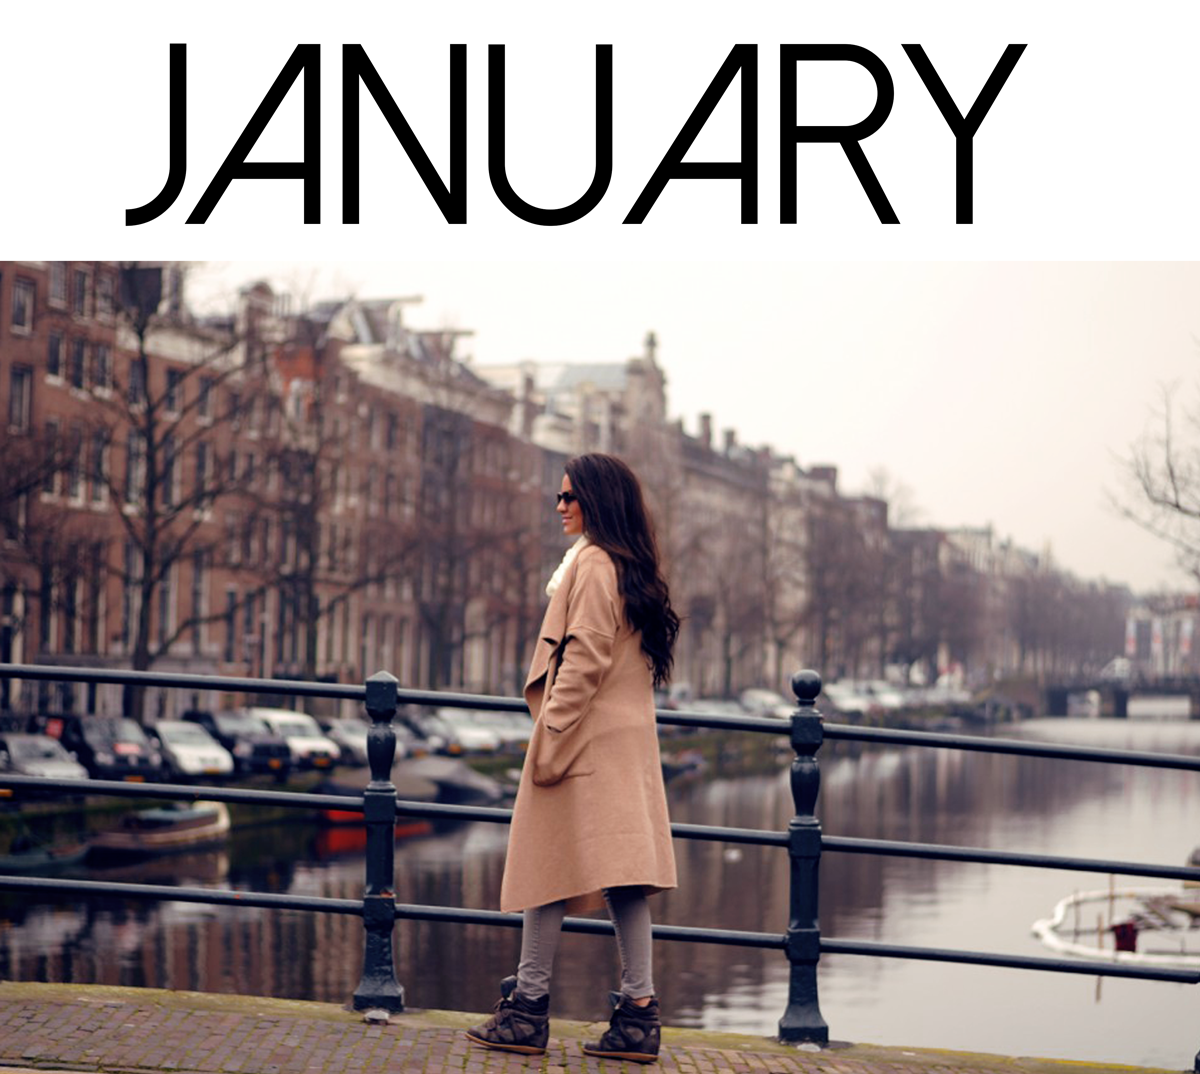 january1